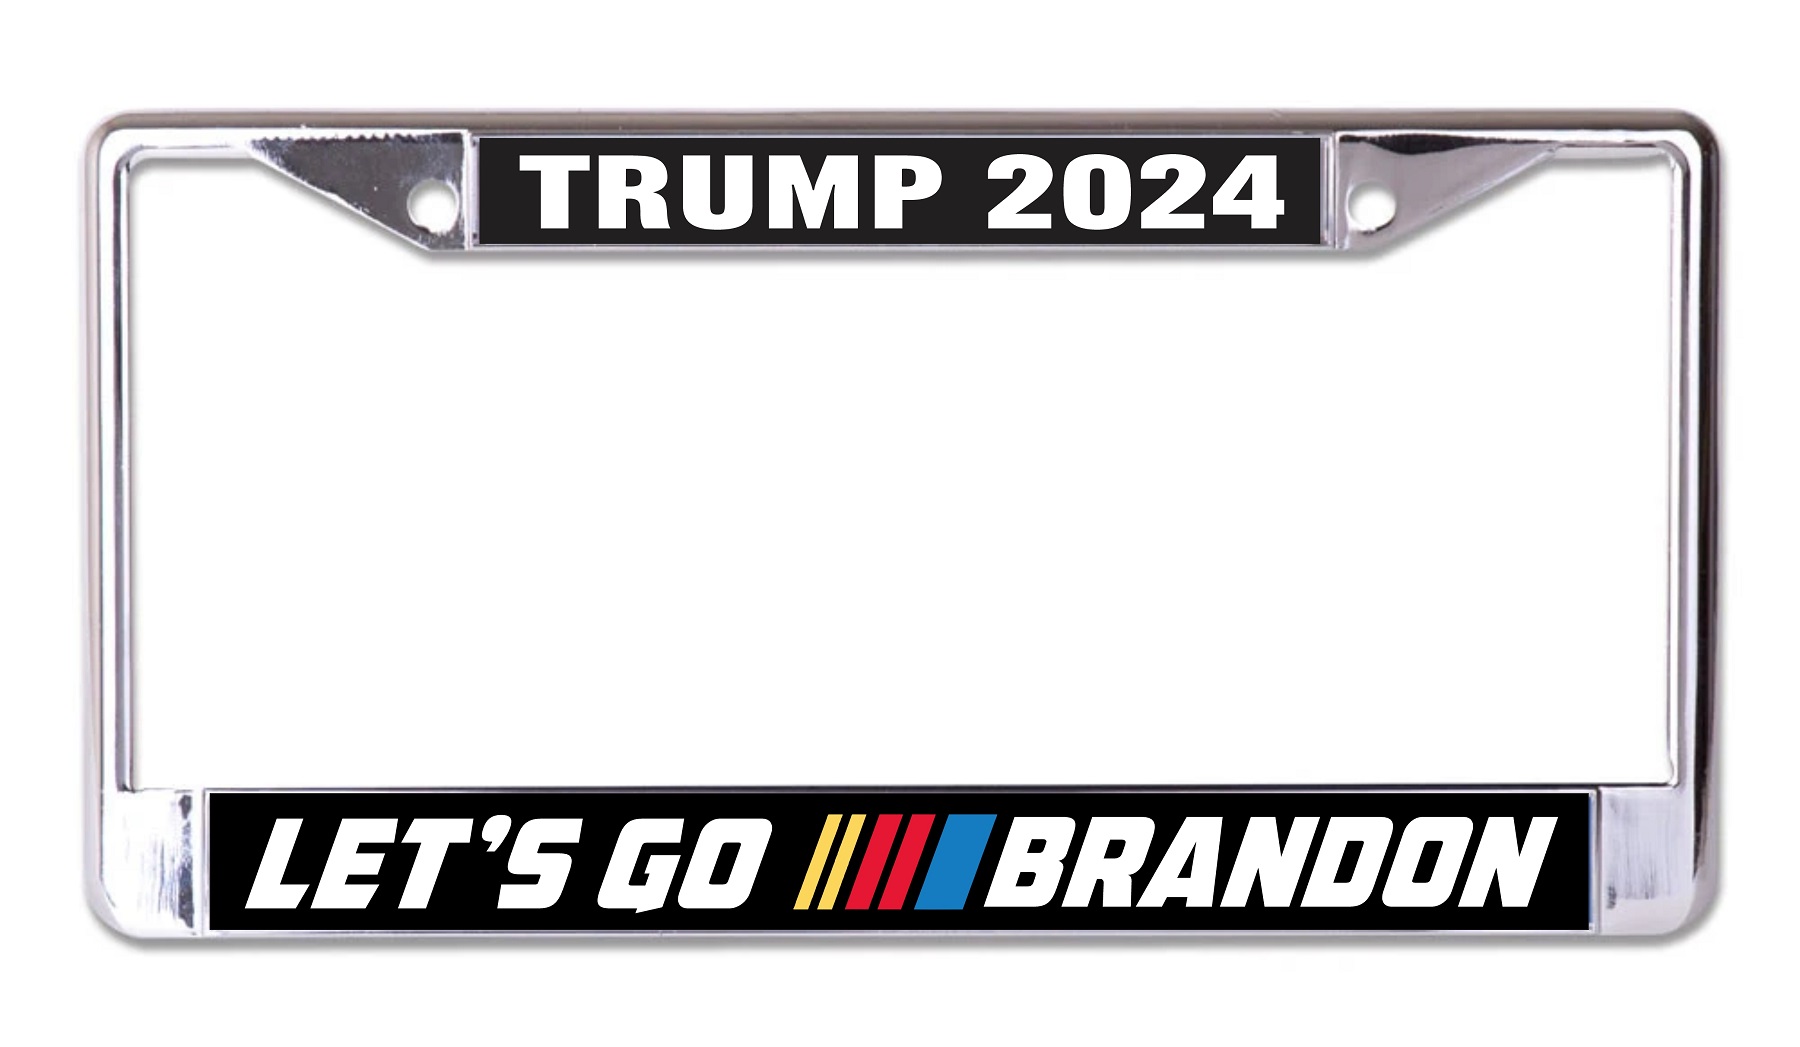 Trump 2024 Lets Go Brandon Chrome License Plate FRAME